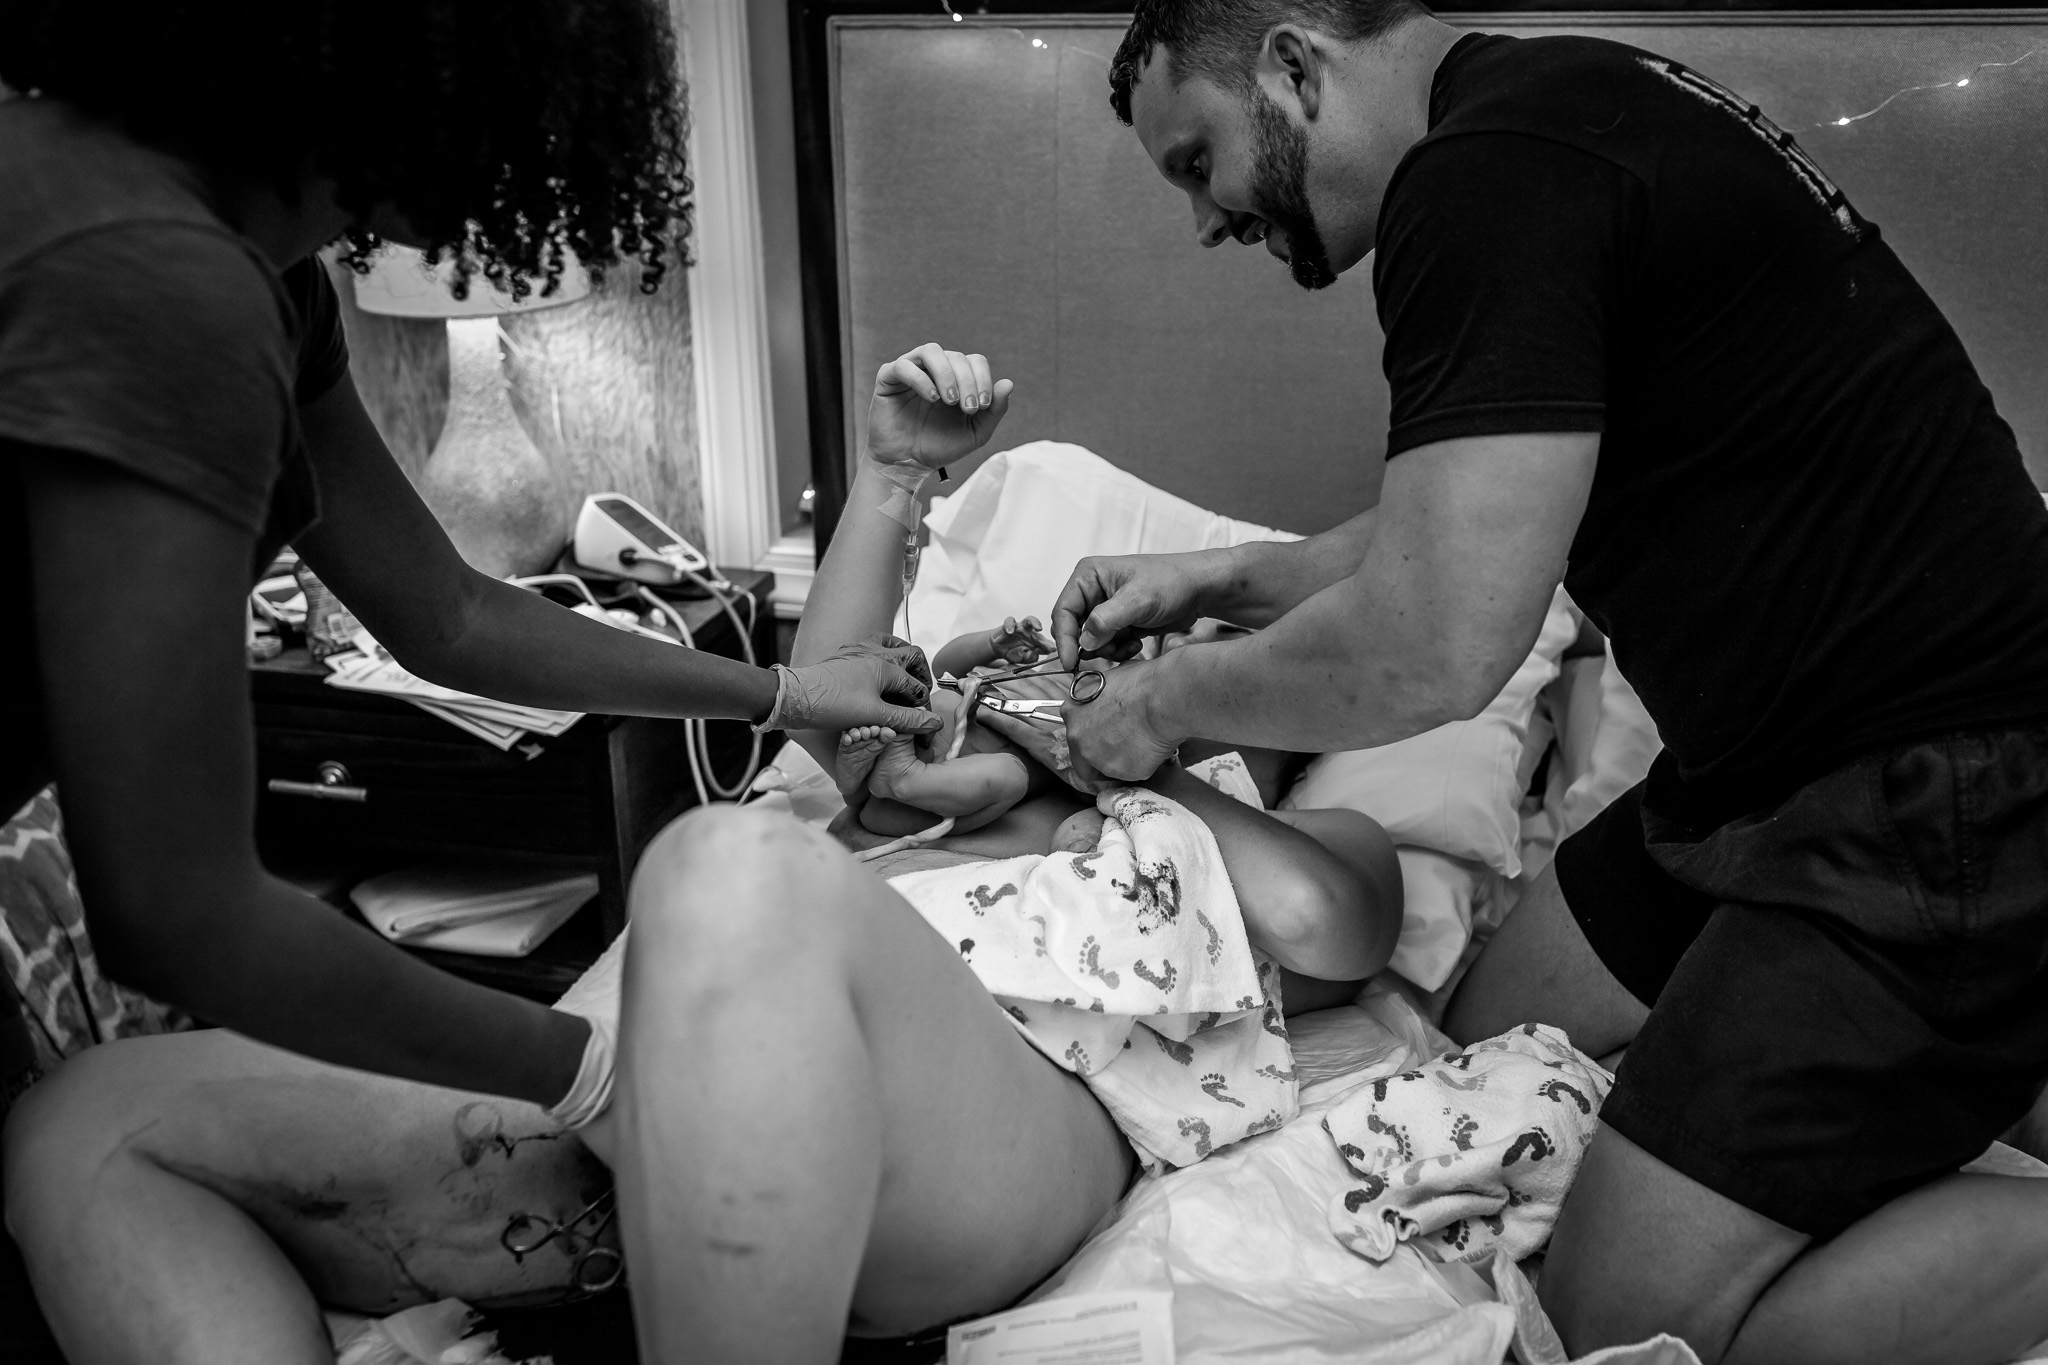 Dad cuts umbilical cord birth center